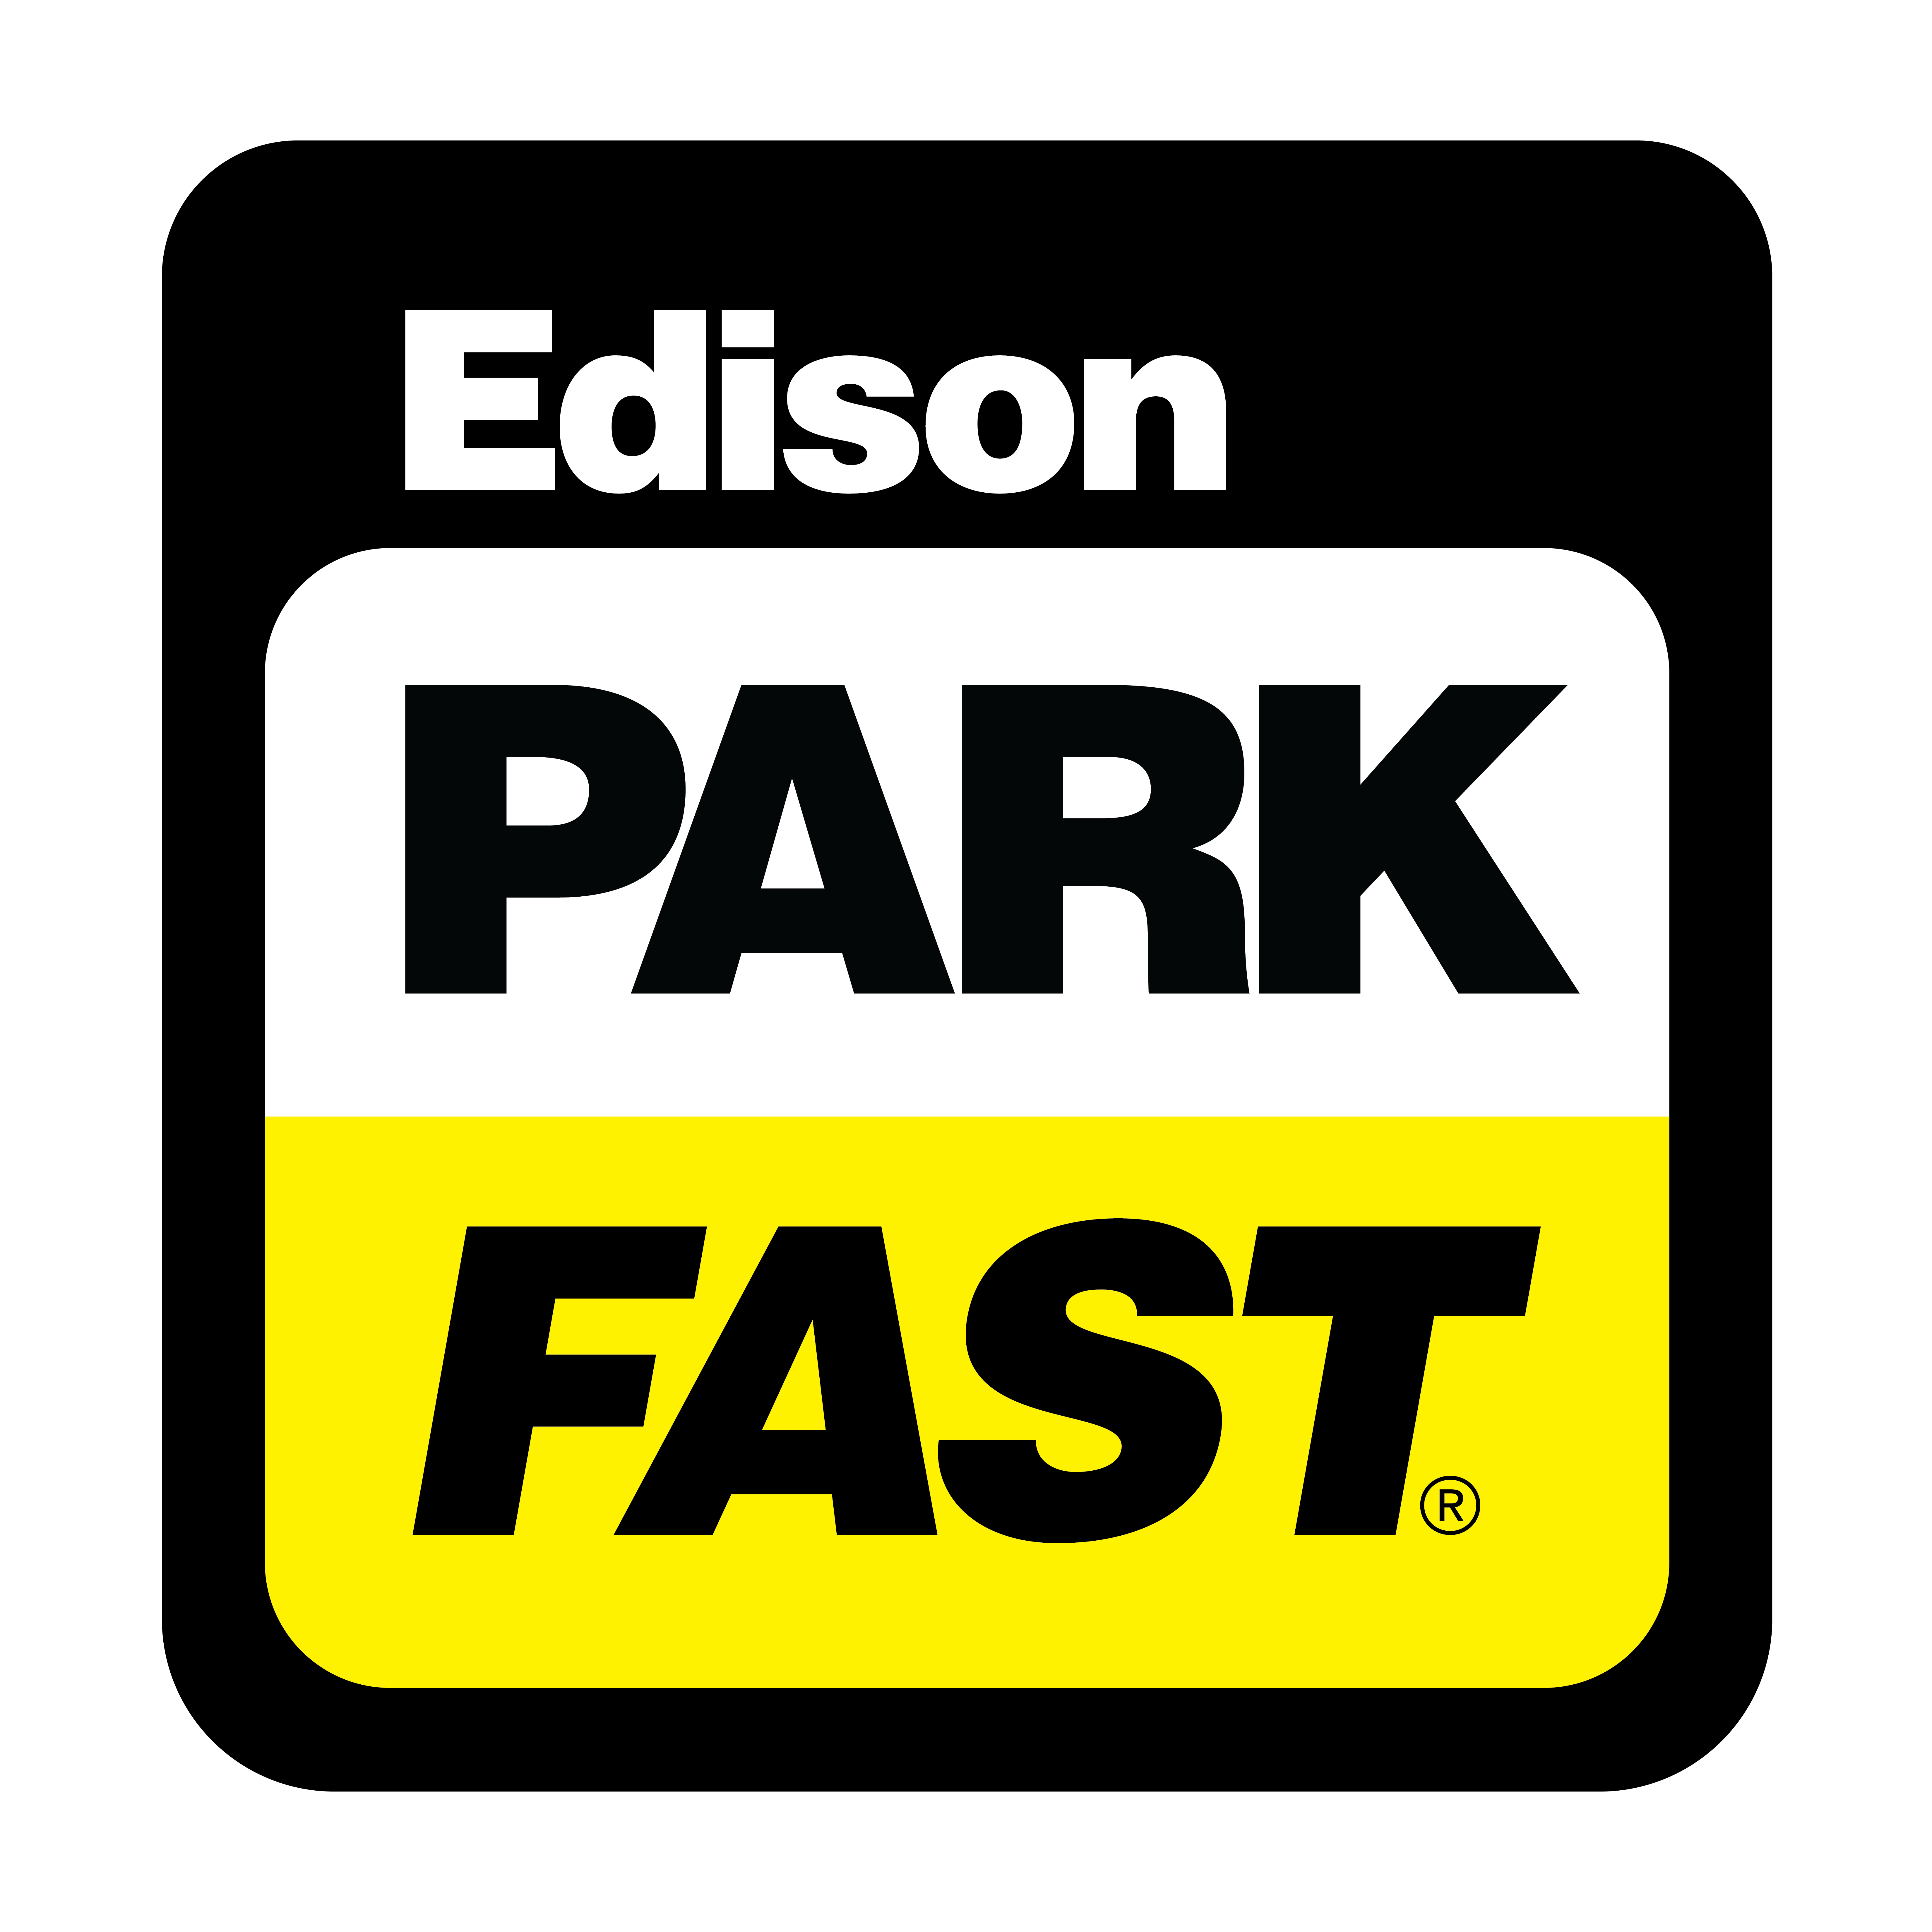 Edison ParkFast - Newark, NJ 07105 - (888)727-5327 | ShowMeLocal.com